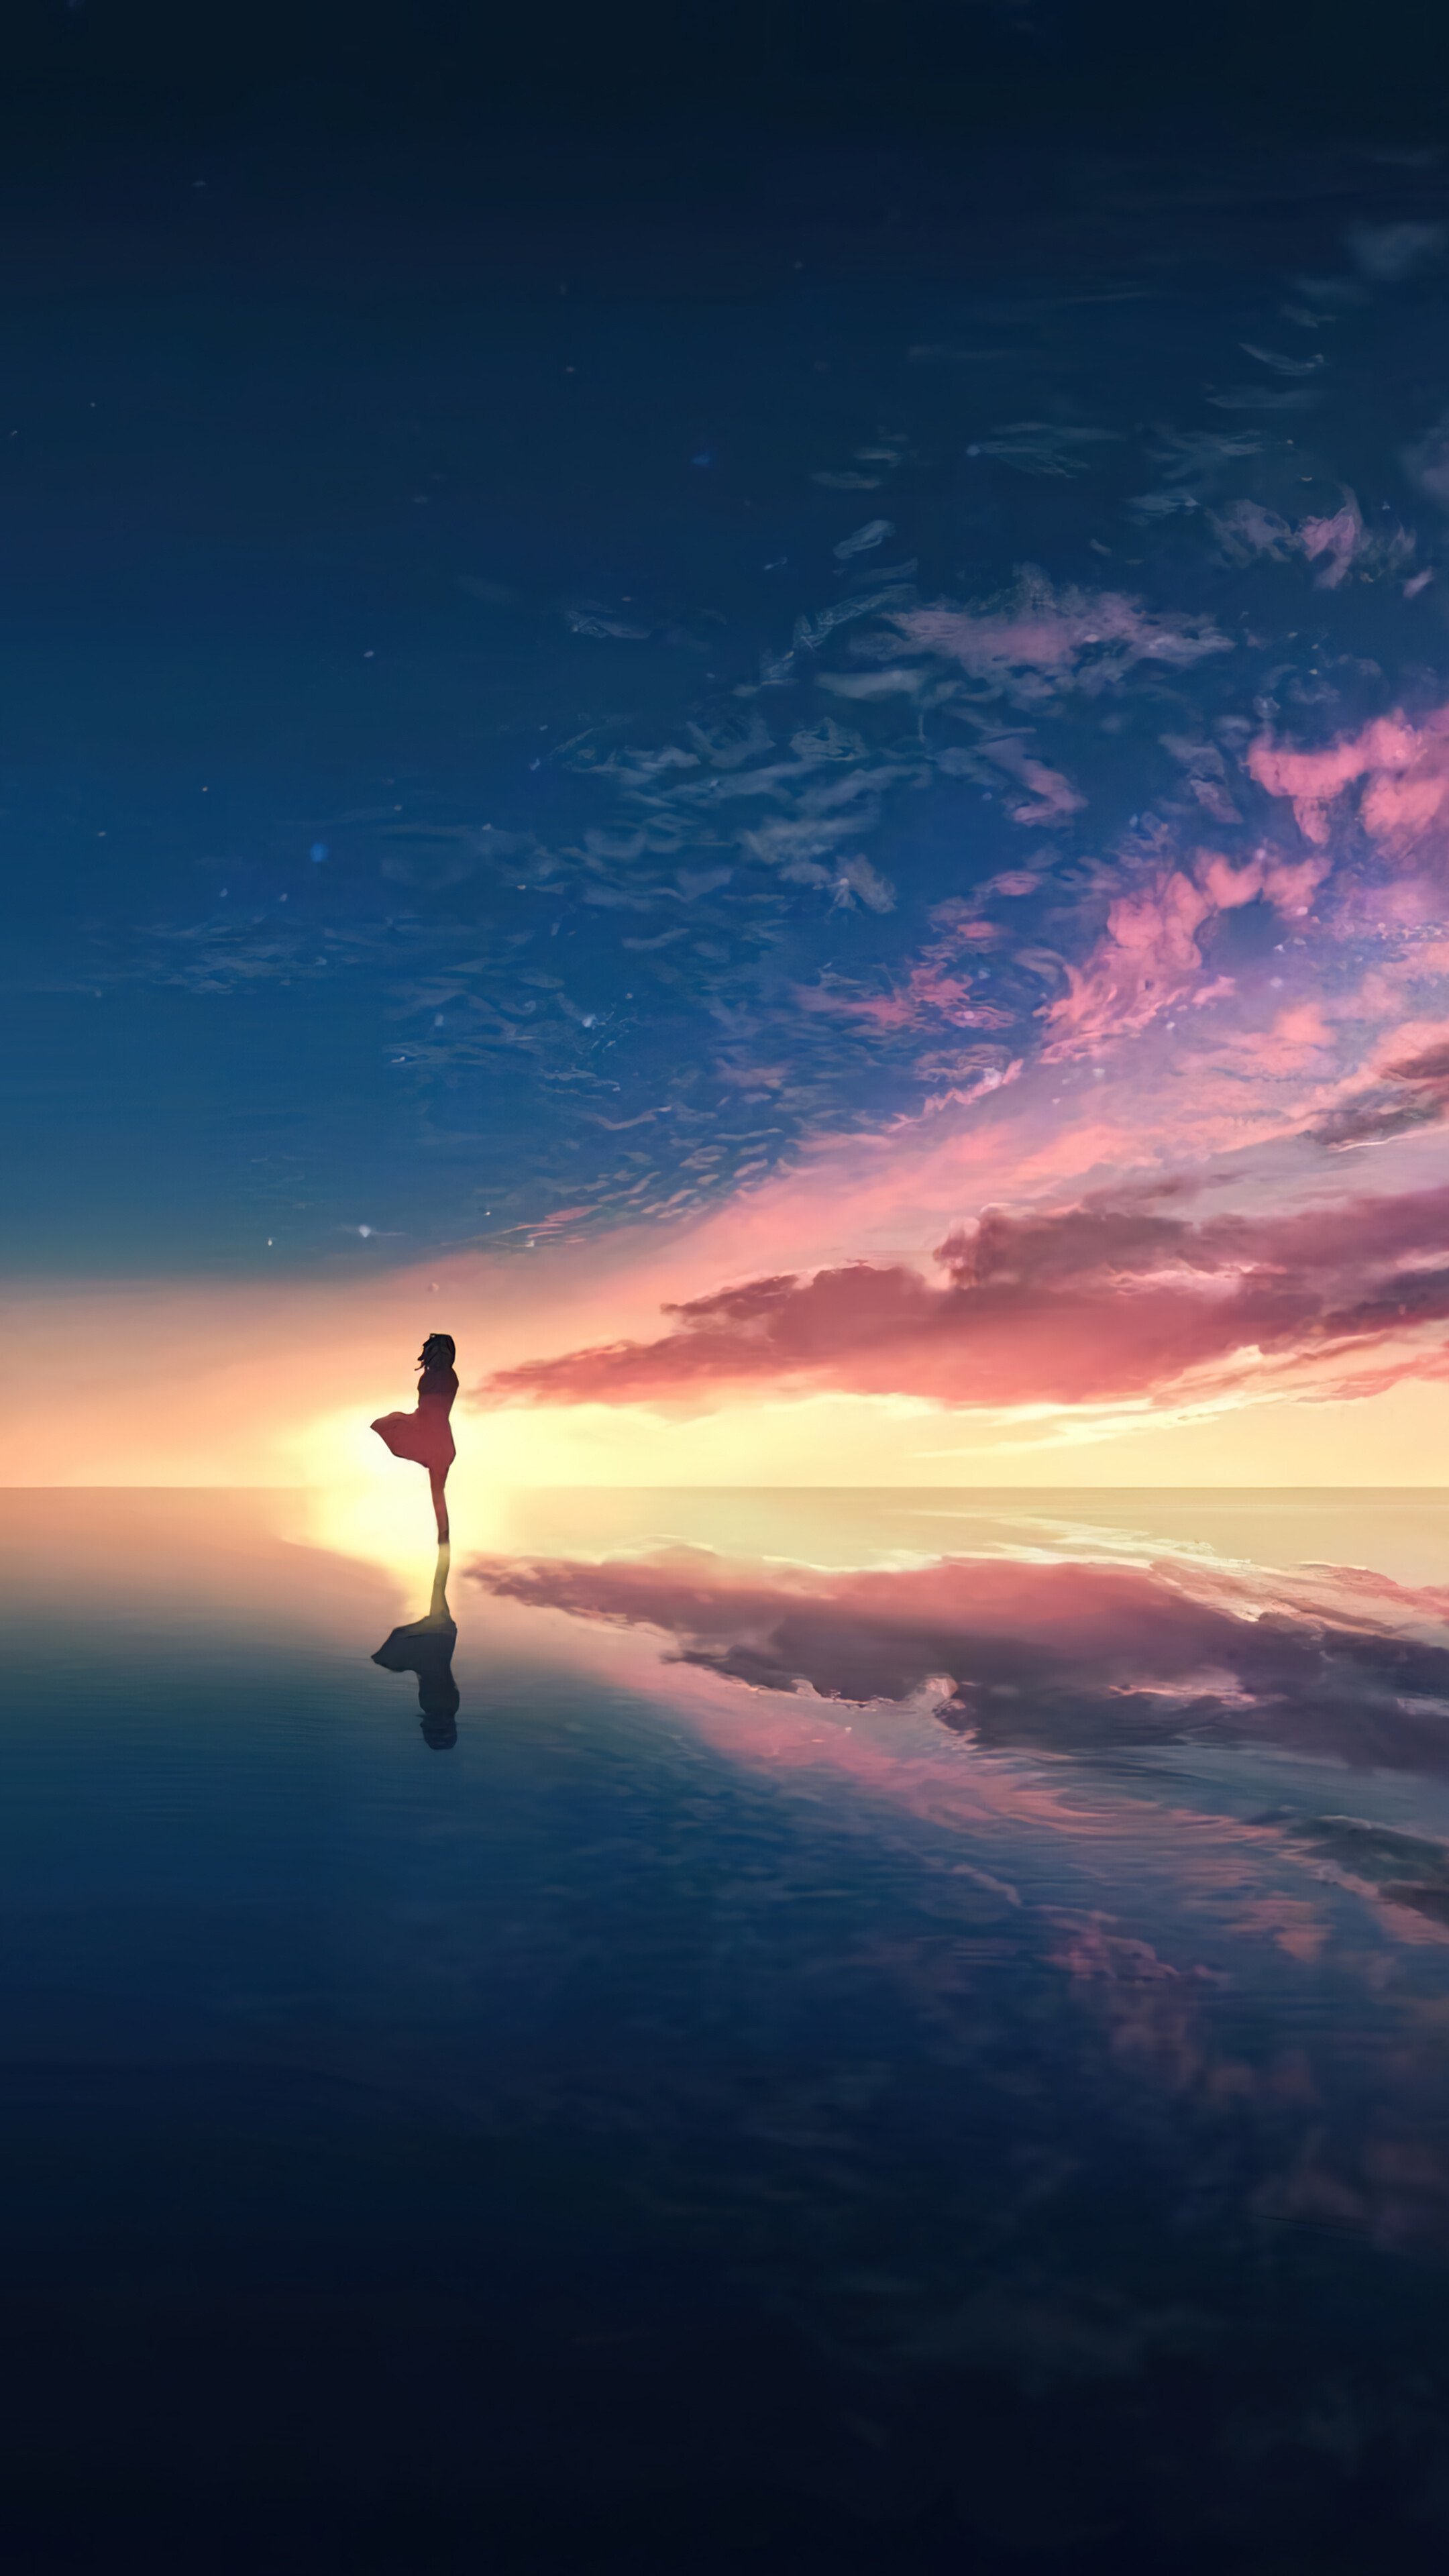 Sunset Anime Girl Silhouette Horizon Clouds Scenery 4k Wallpaper